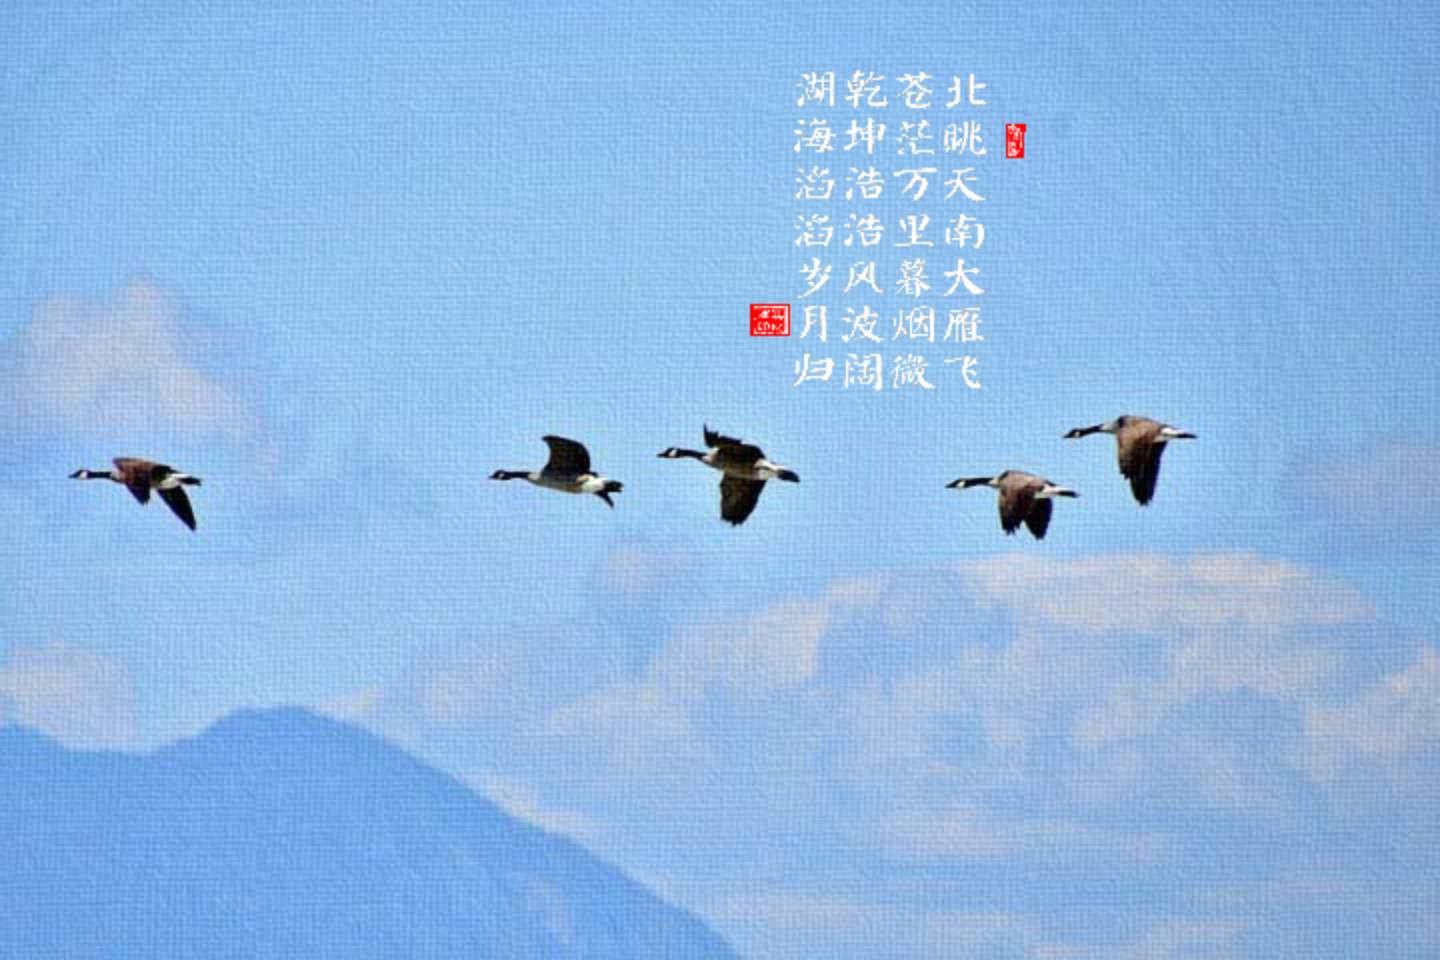 wild-geese-formation-4432986_960_720 (1).jpg